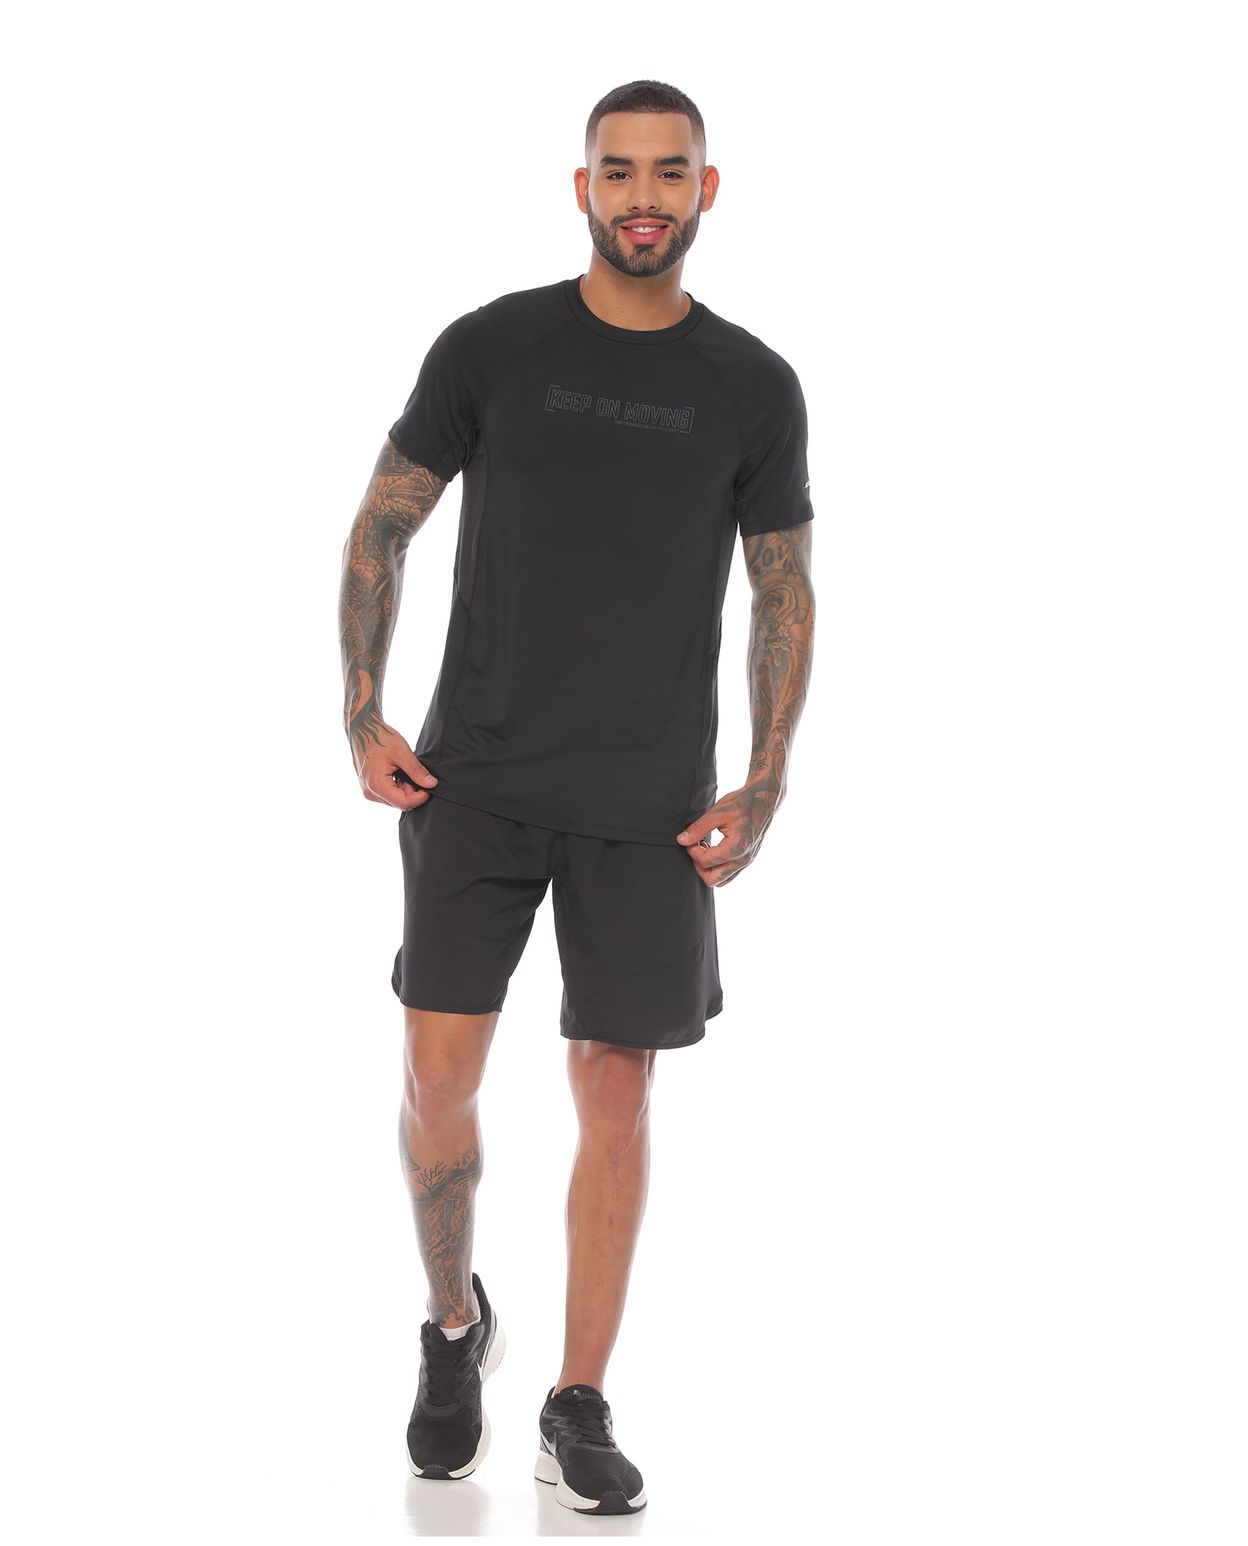 modelo con pantaloneta y camiseta manga corta deportiva color negro para hombre cuerpo completo